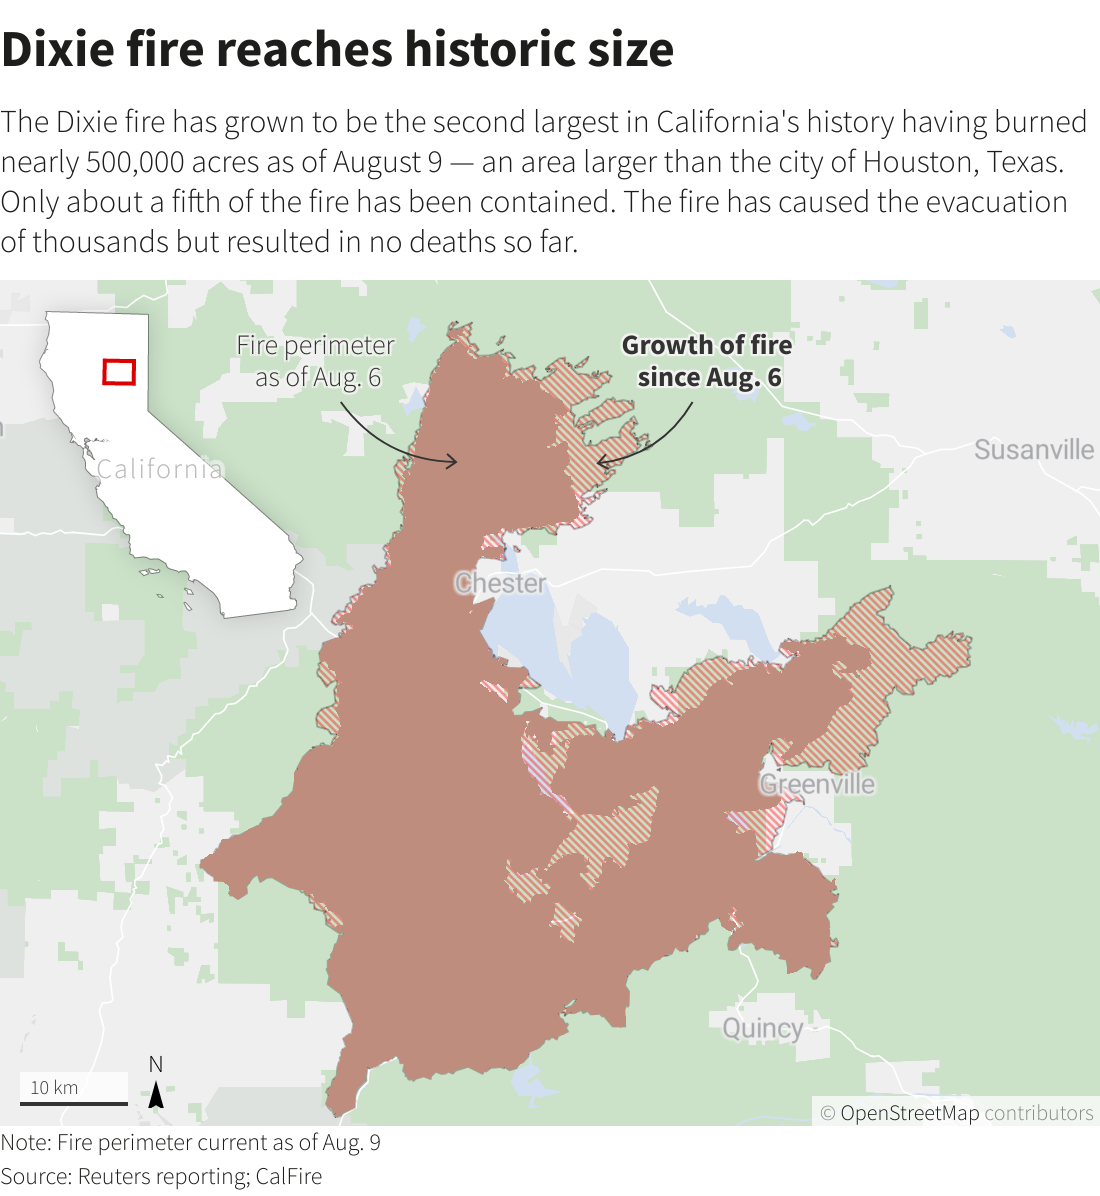 Dixie fire reaches historic size